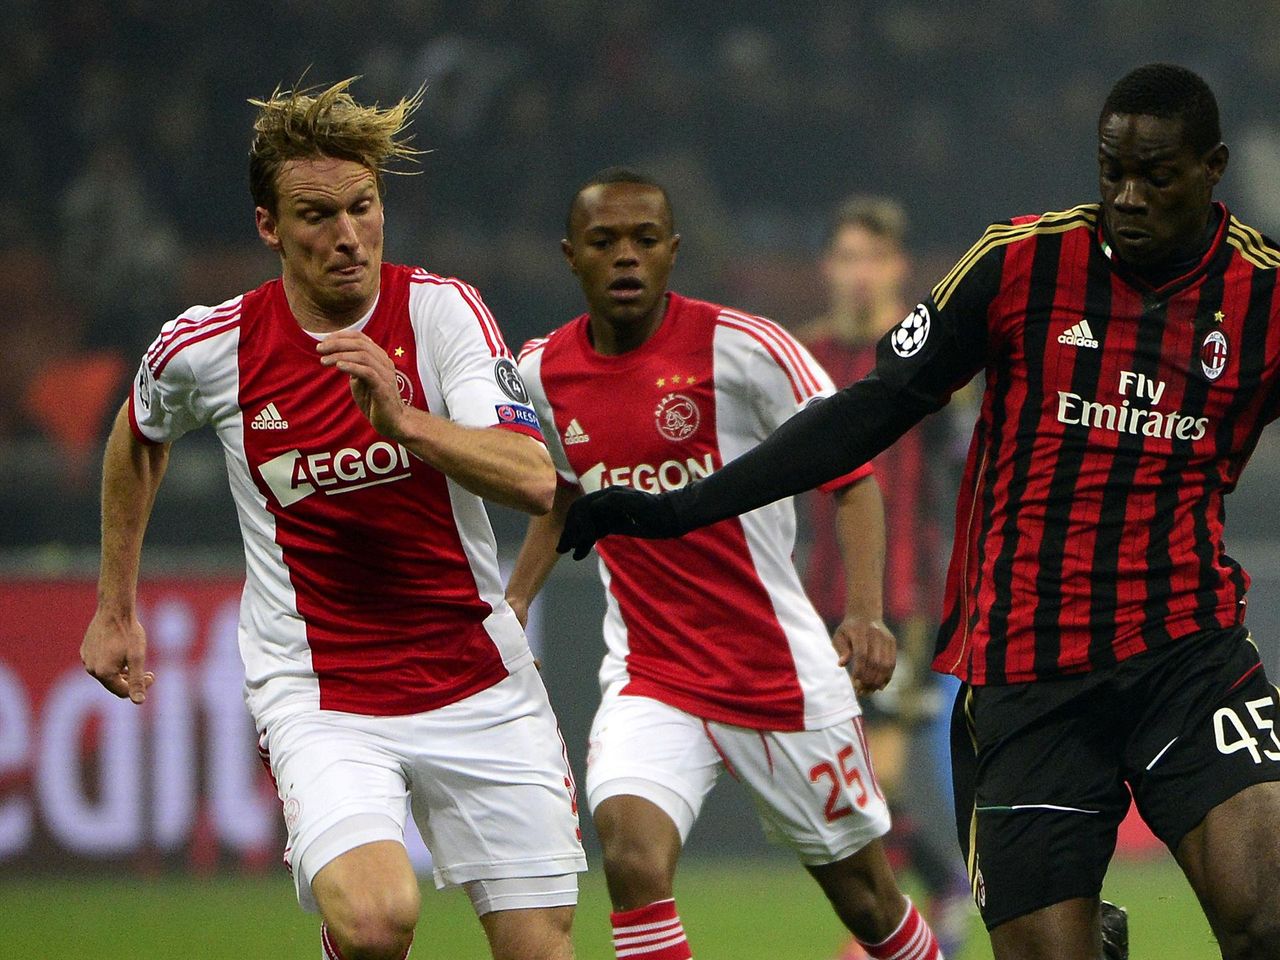 Seaboard halv otte Hør efter Ten-man Milan hold on for draw with Ajax to qualify - Eurosport